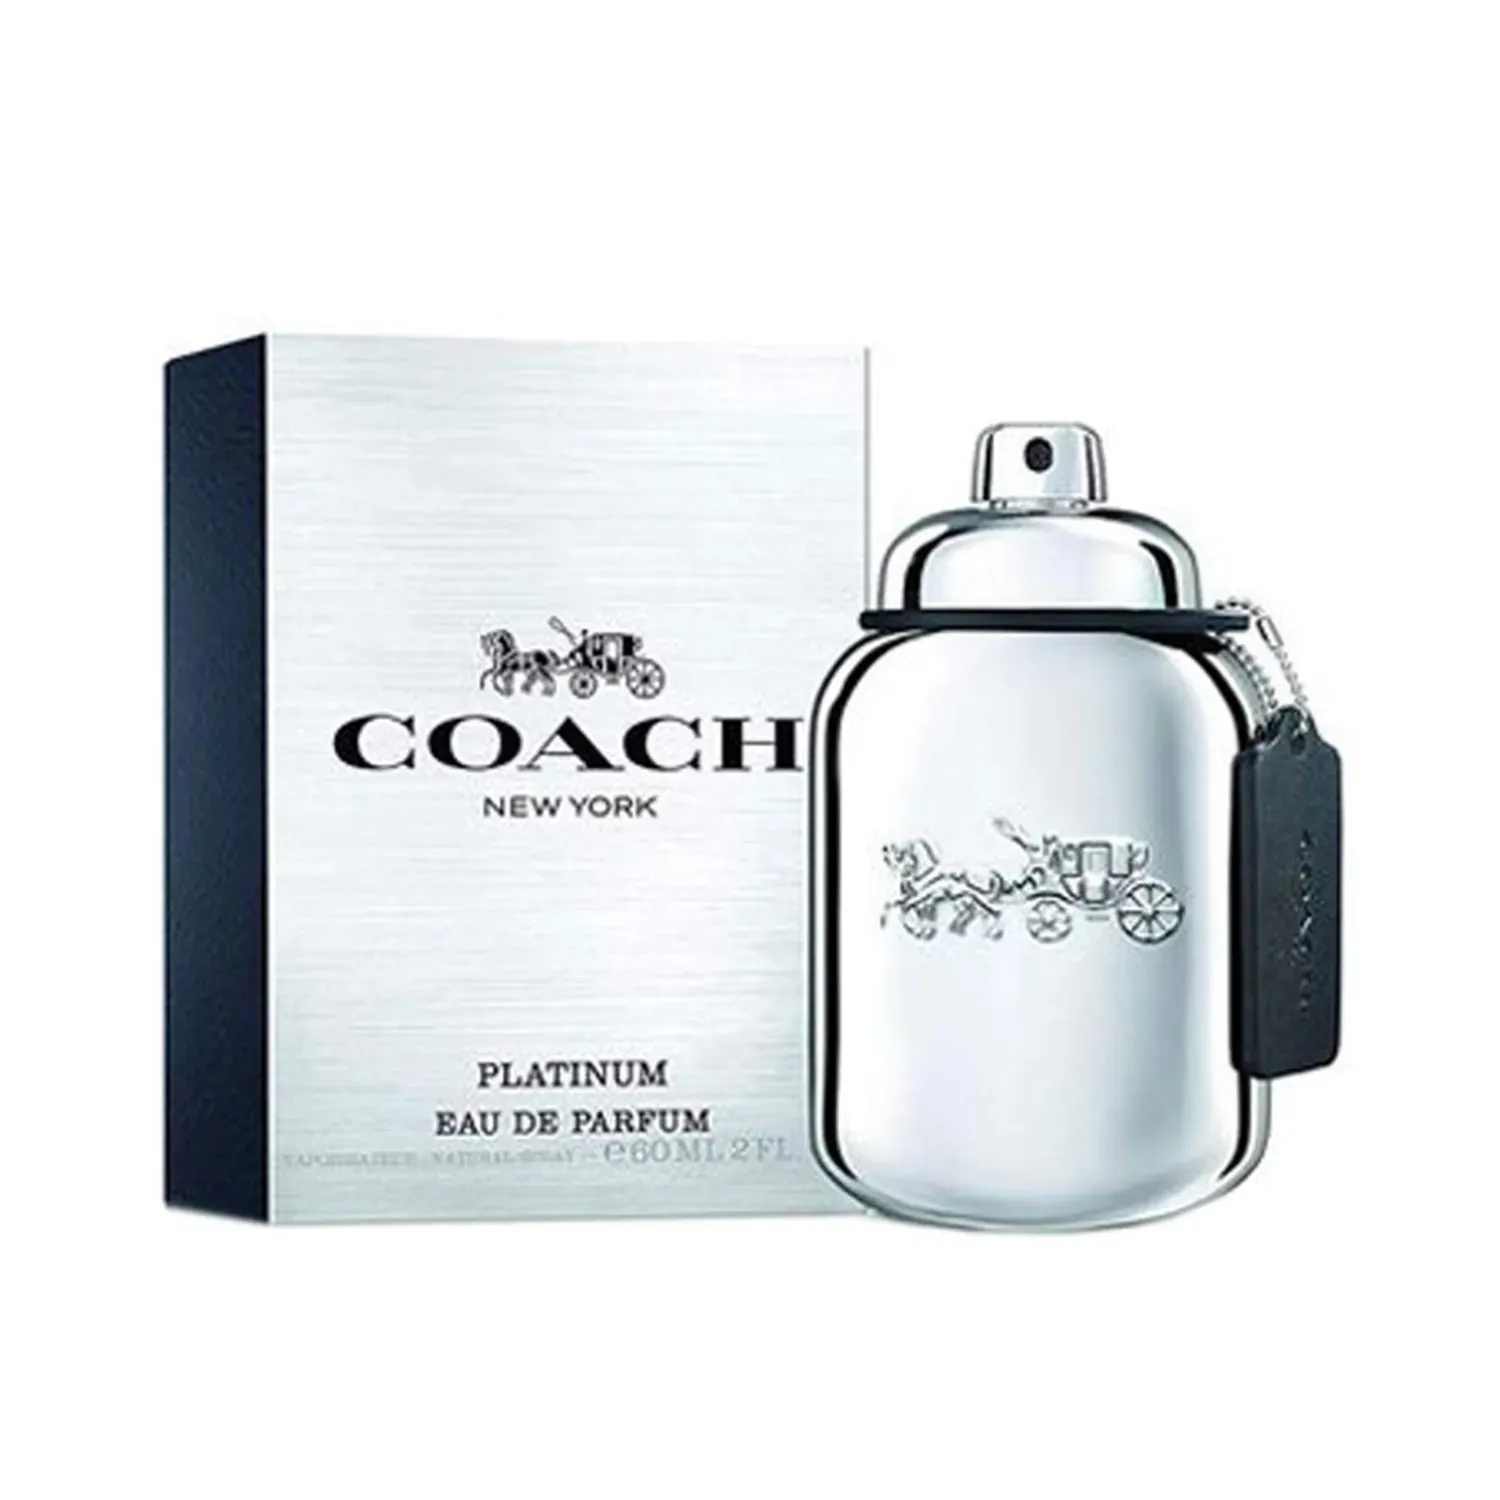 Coach | Coach New York Platinum Eau De Parfum (60ml)